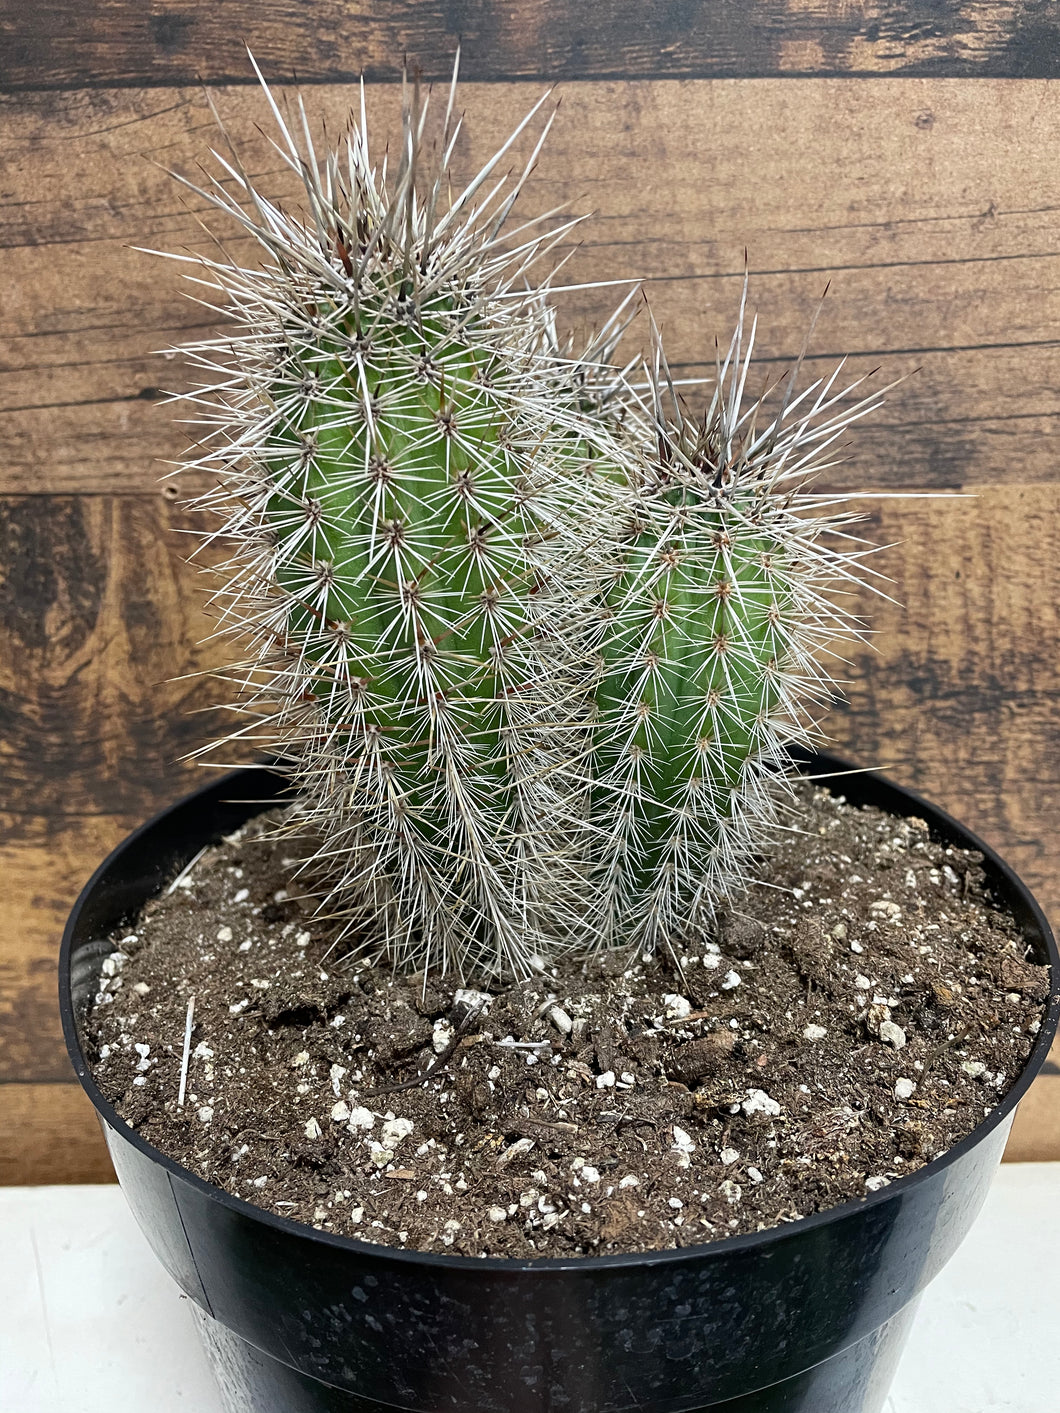 False saguaro cactus